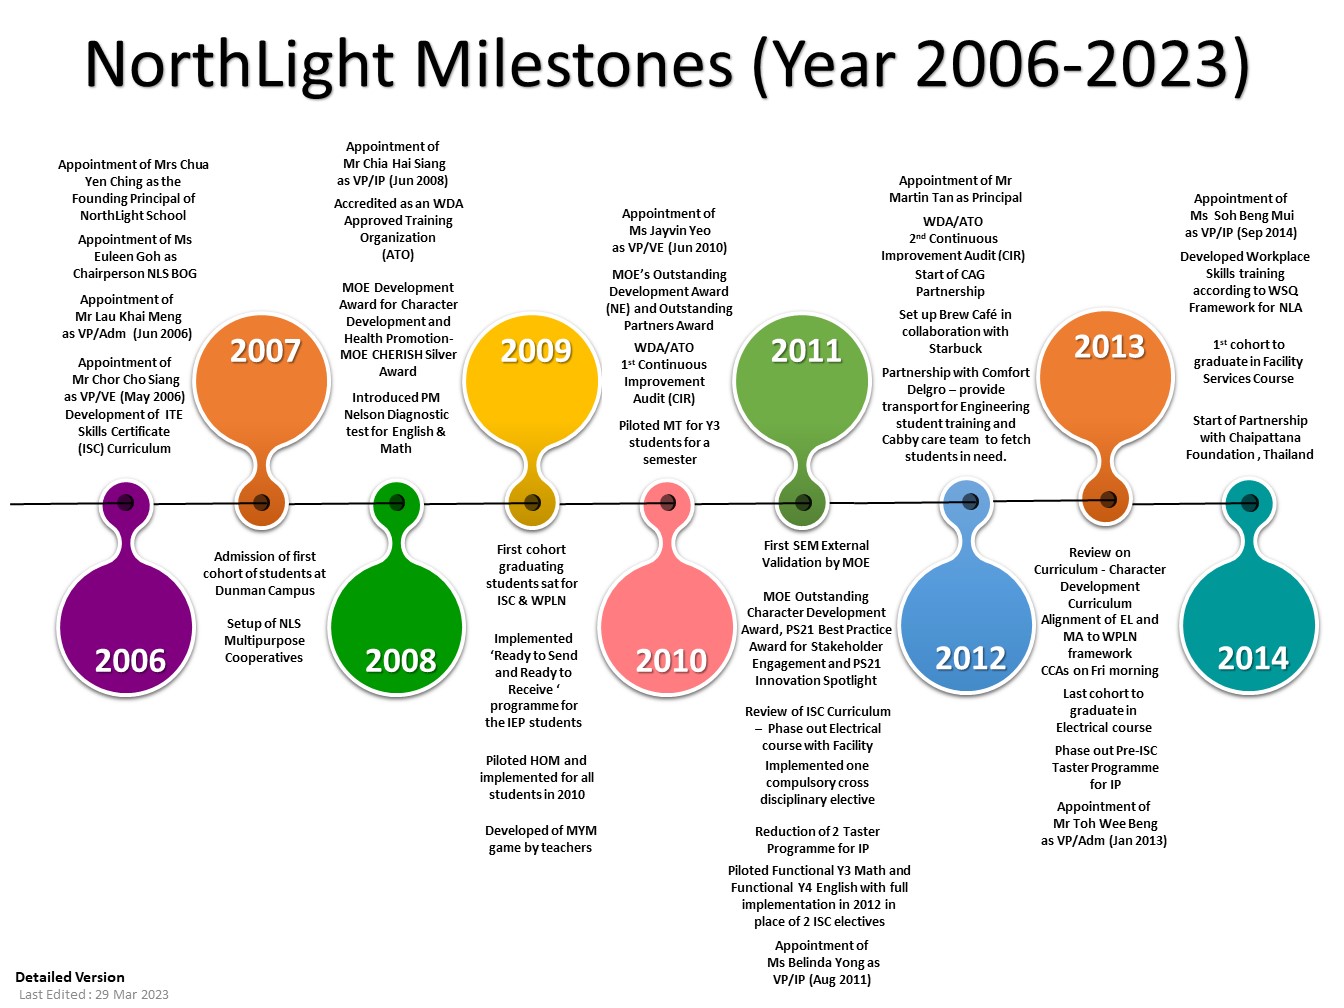 NLS Milestone (Year 2006 - 2014)